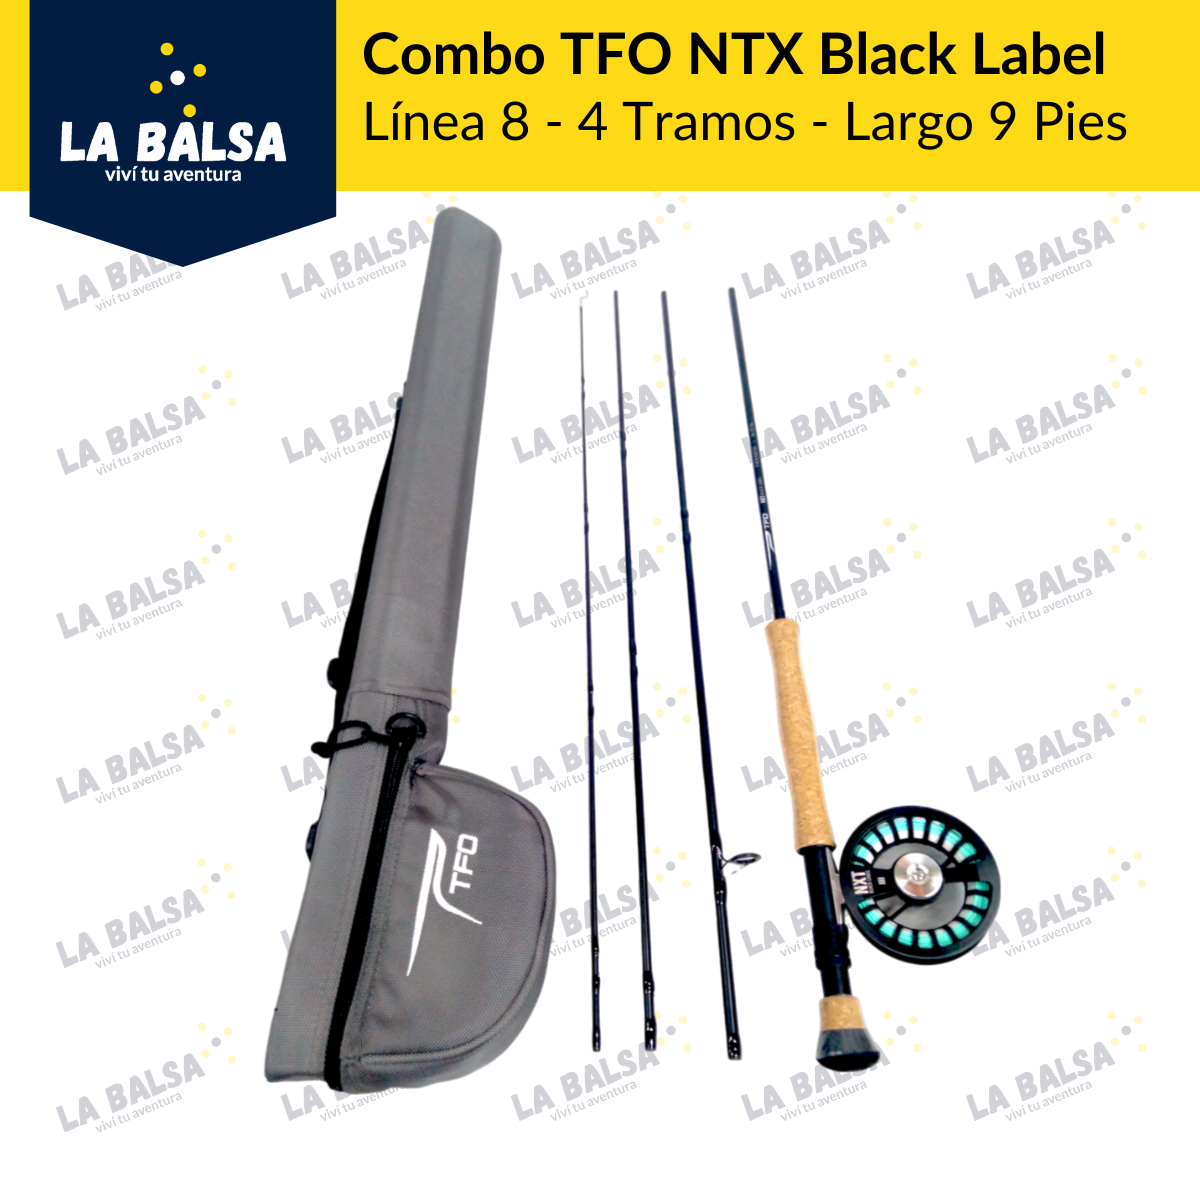 Combo Tfo Nxt Black Label Caña #8 Reel Estuche Pescar - La Balsa